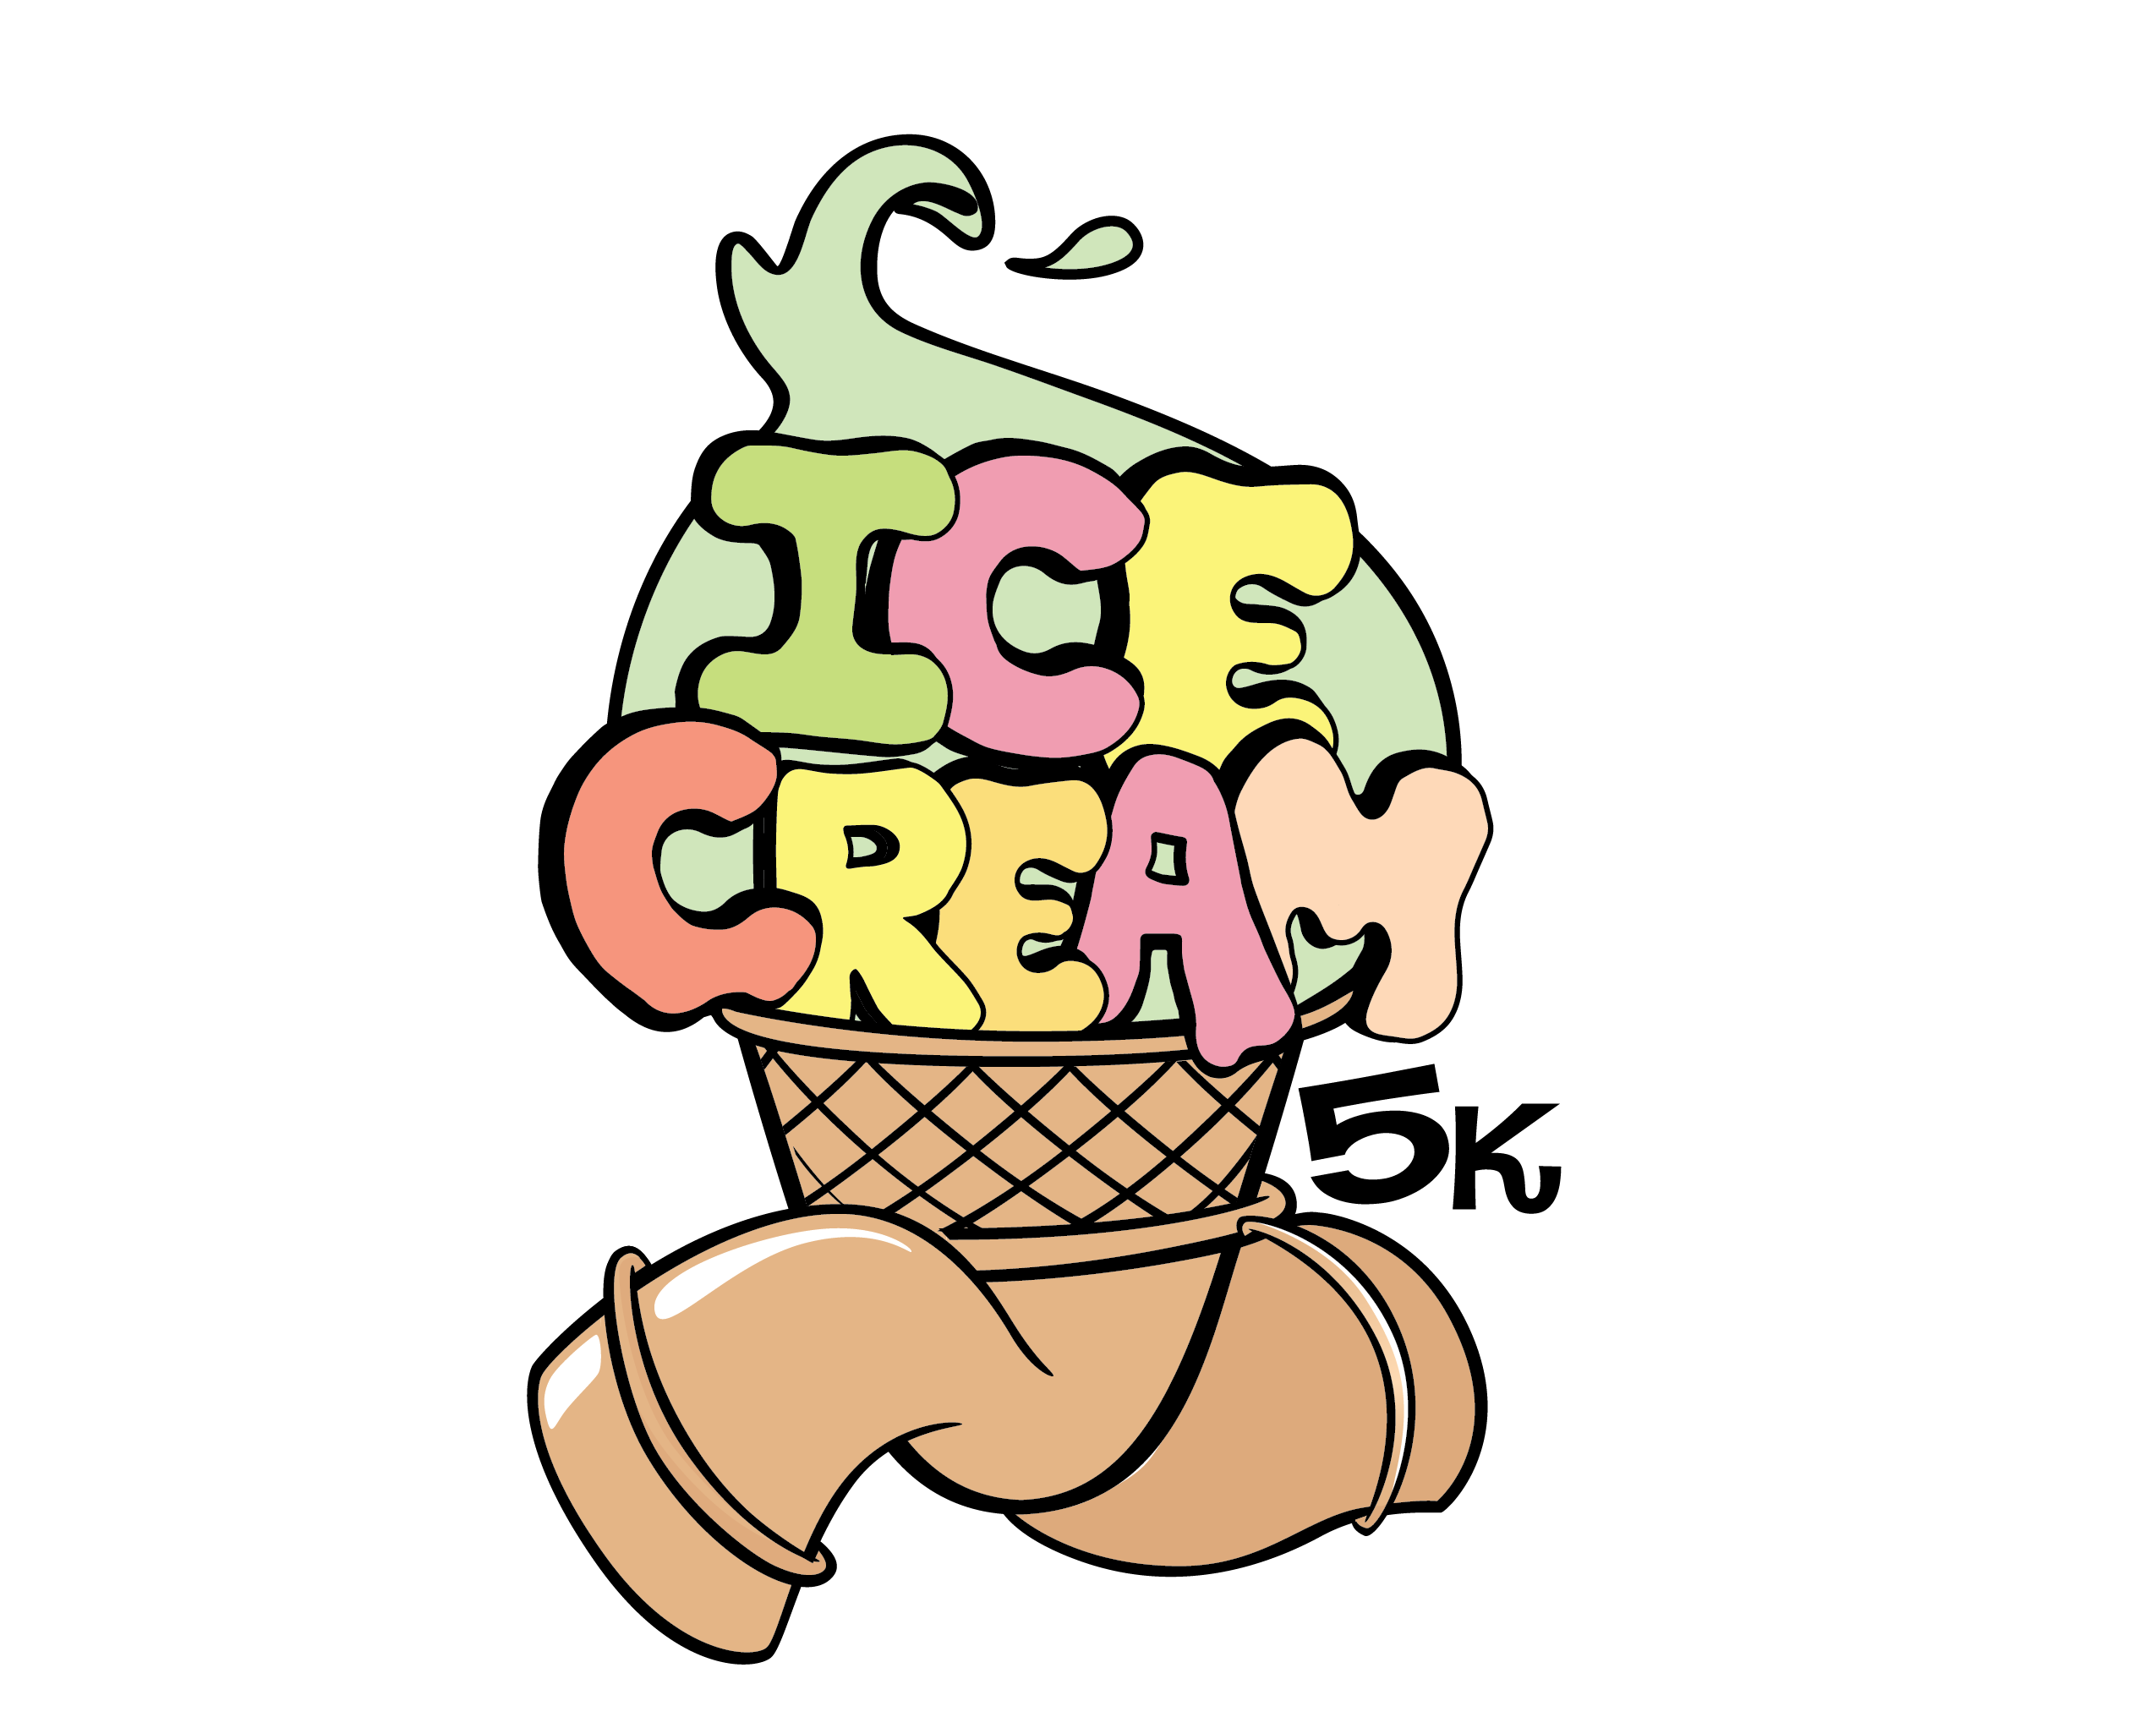 Ice Cream 5K Cincinnati logo on RaceRaves